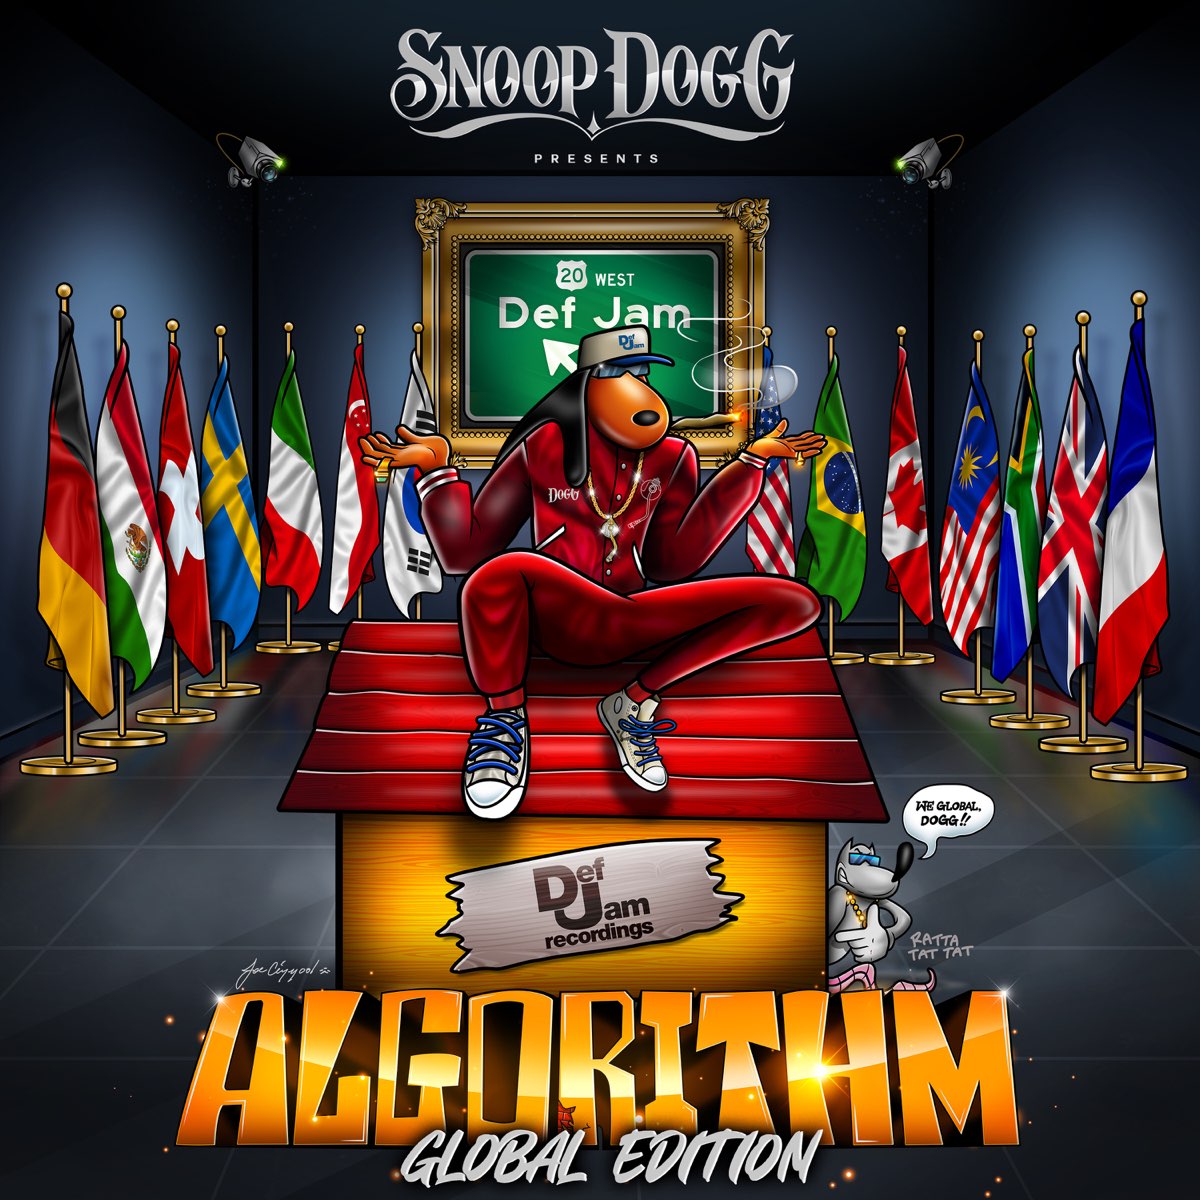 Case Inactive Merciful Snoop Dogg Presents Algorithm (Global Edition) di Snoop Dogg su Apple Music